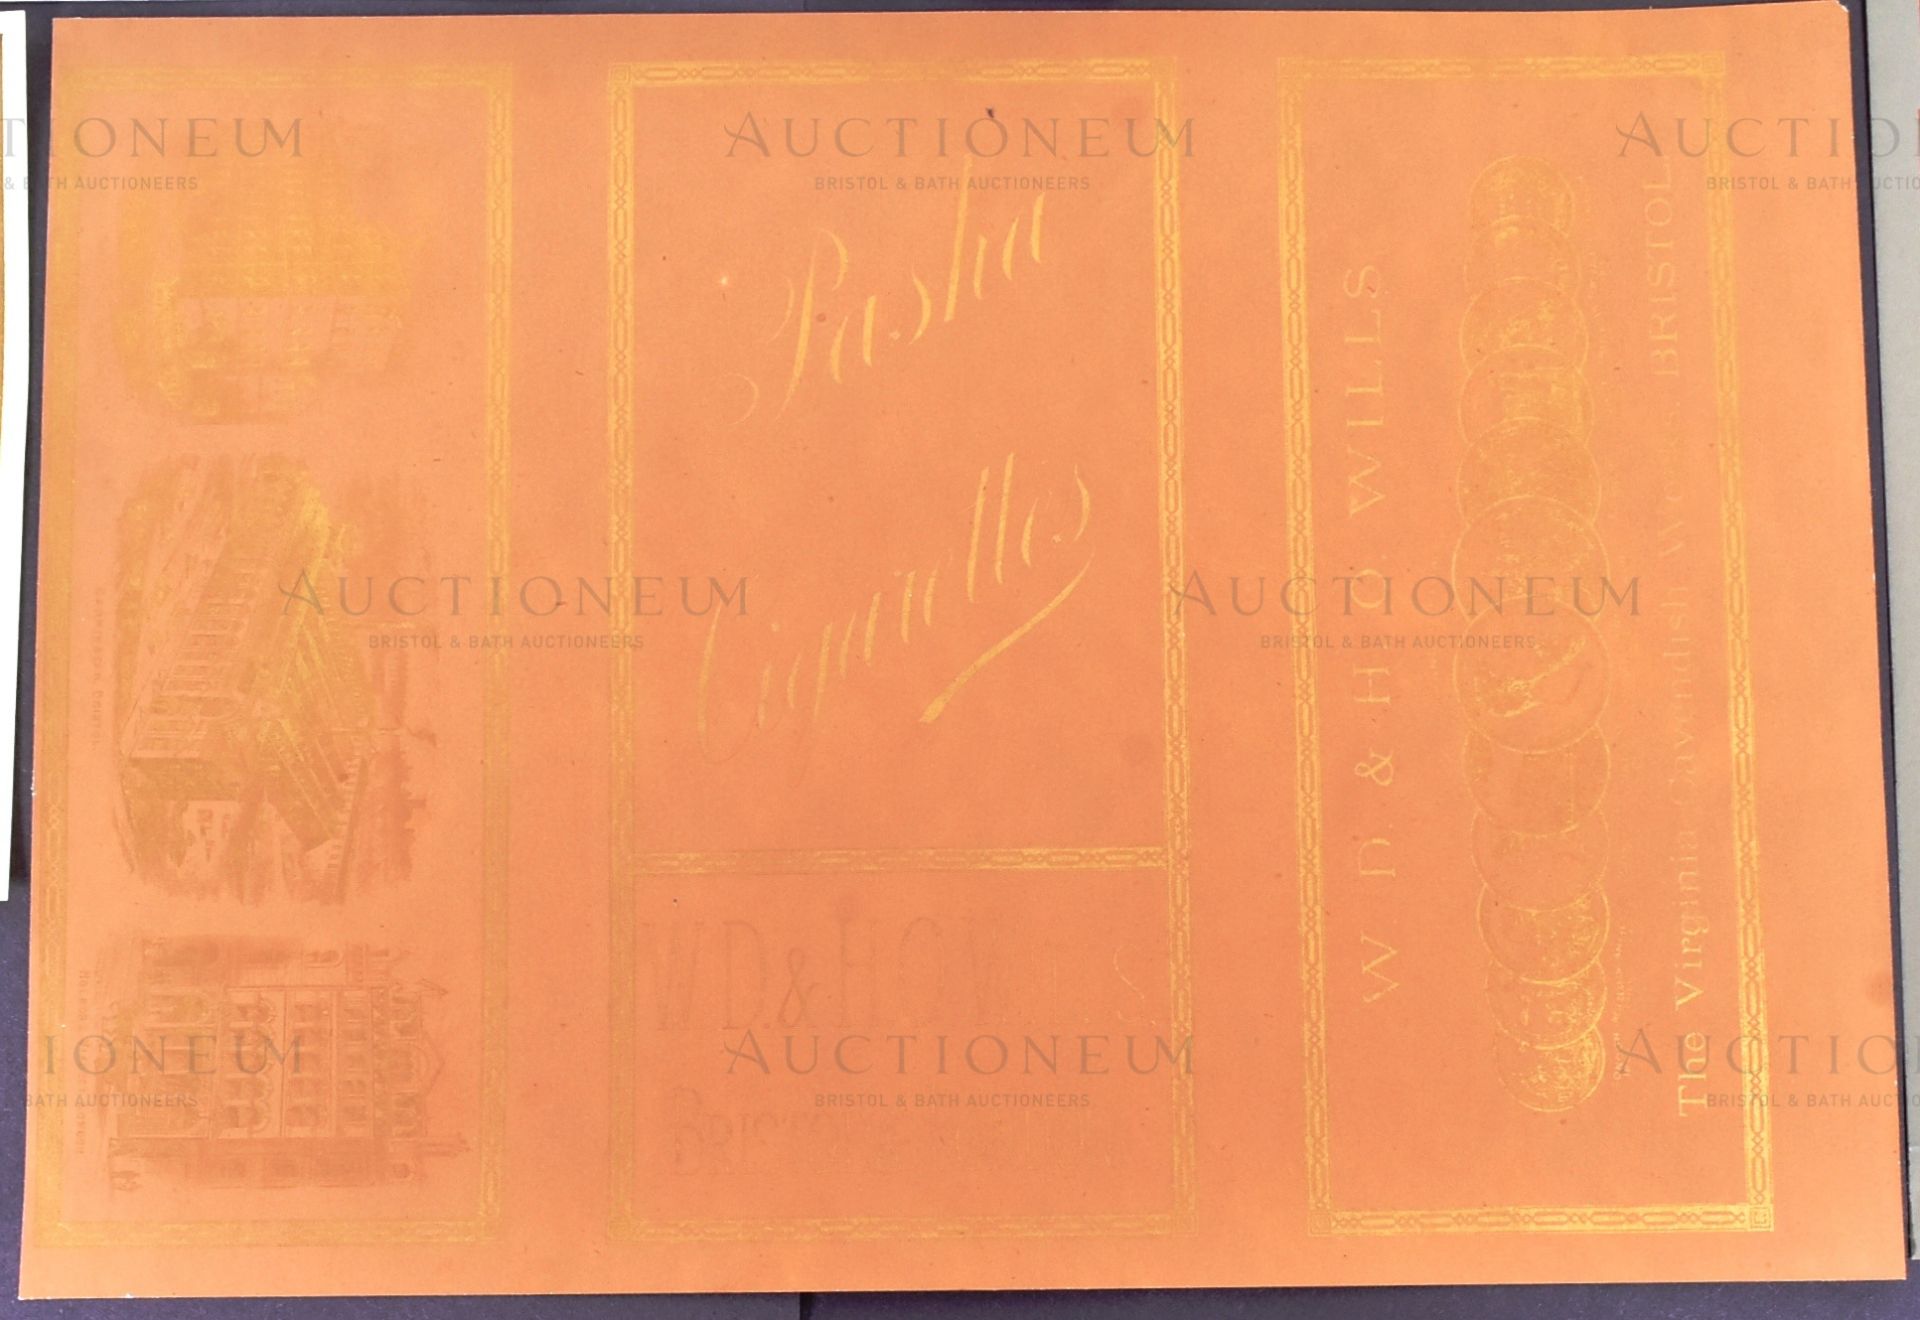 MARDON, SON & HALL - 20TH CENTURY TOBACCO PACKET / LABEL DESIGNS - Image 5 of 7